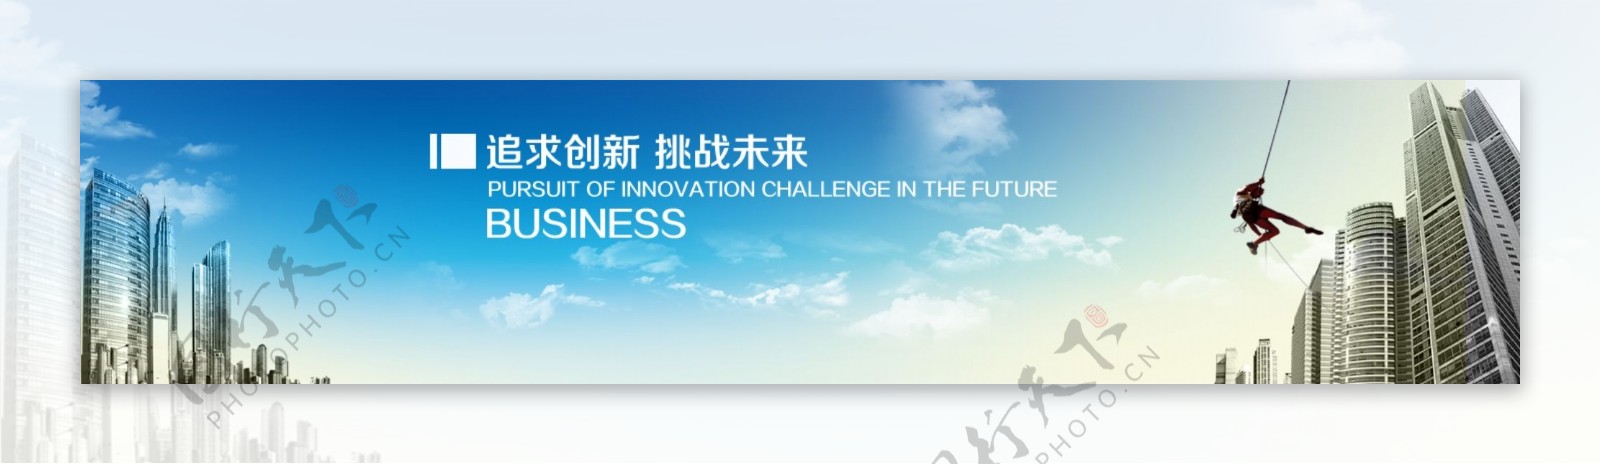 企业网站Banner图片